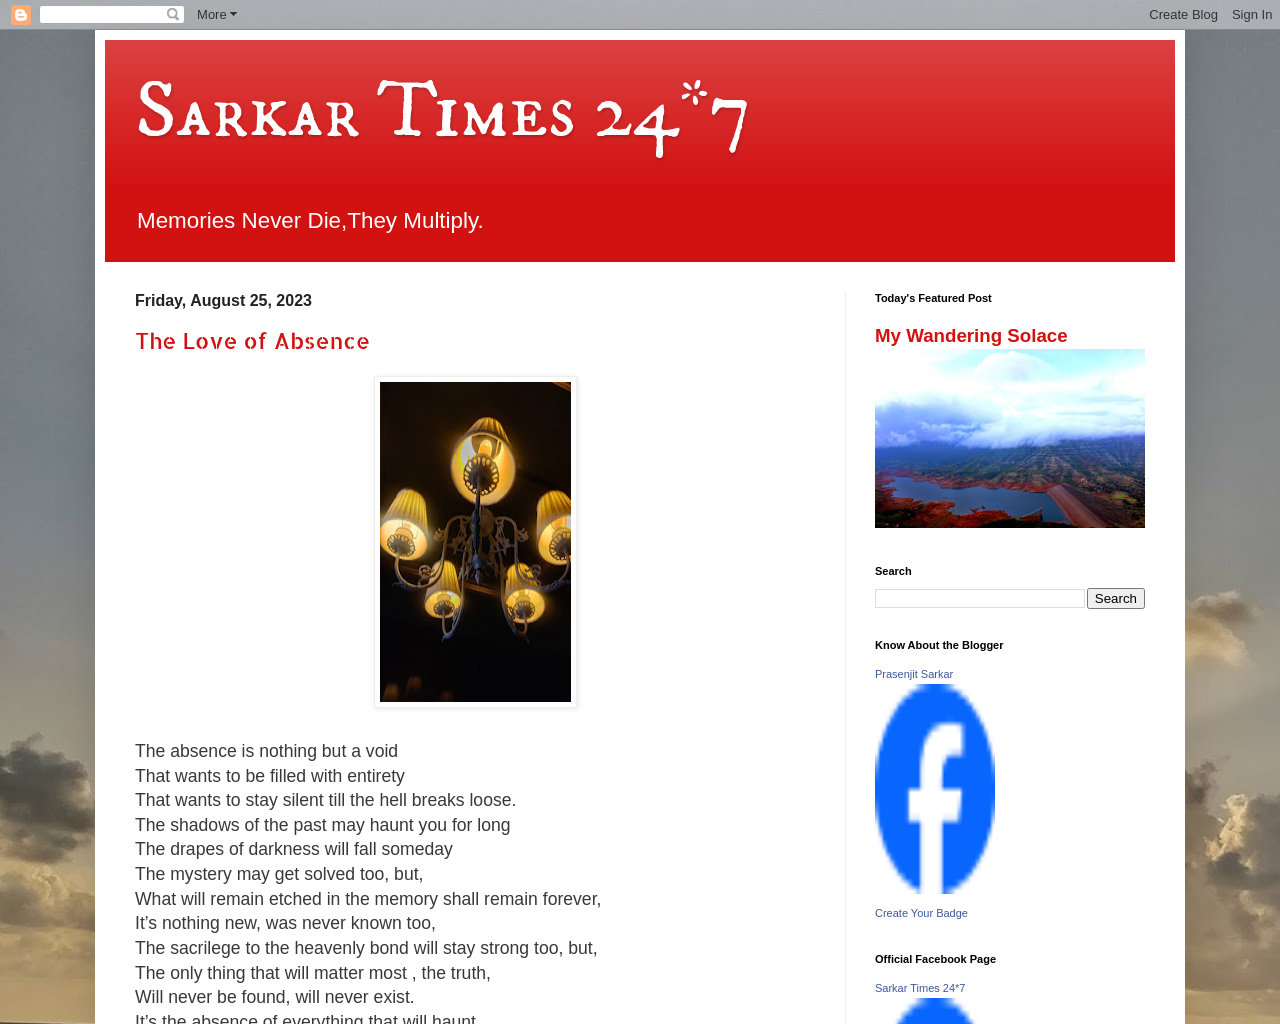 Sarkar Times 24*7